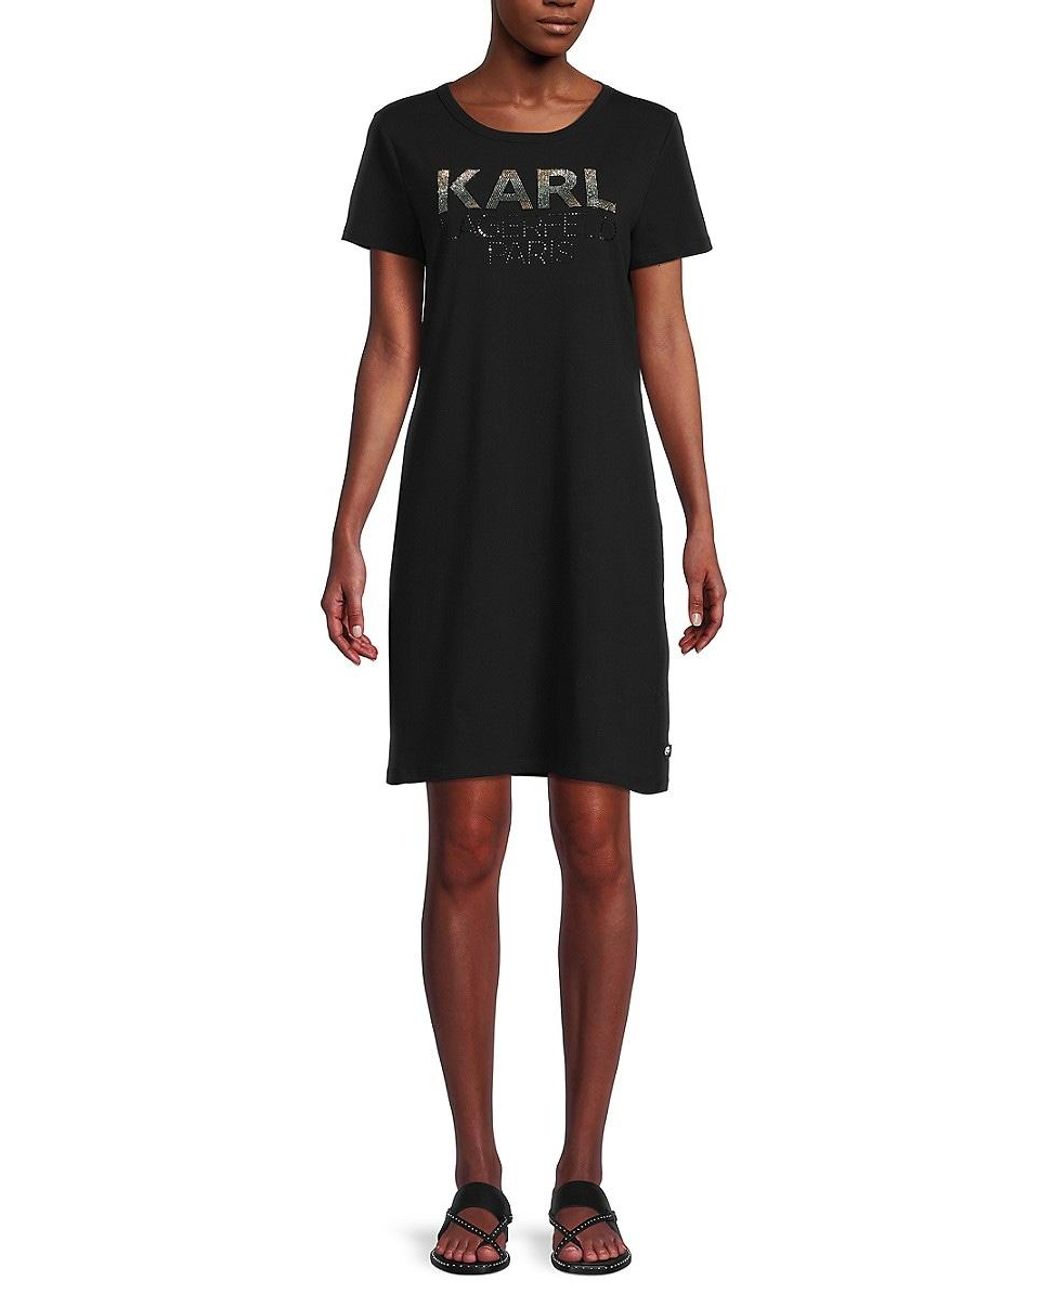 Karl Lagerfeld Rhinestone Logo T-shirt Dress in Black | Lyst